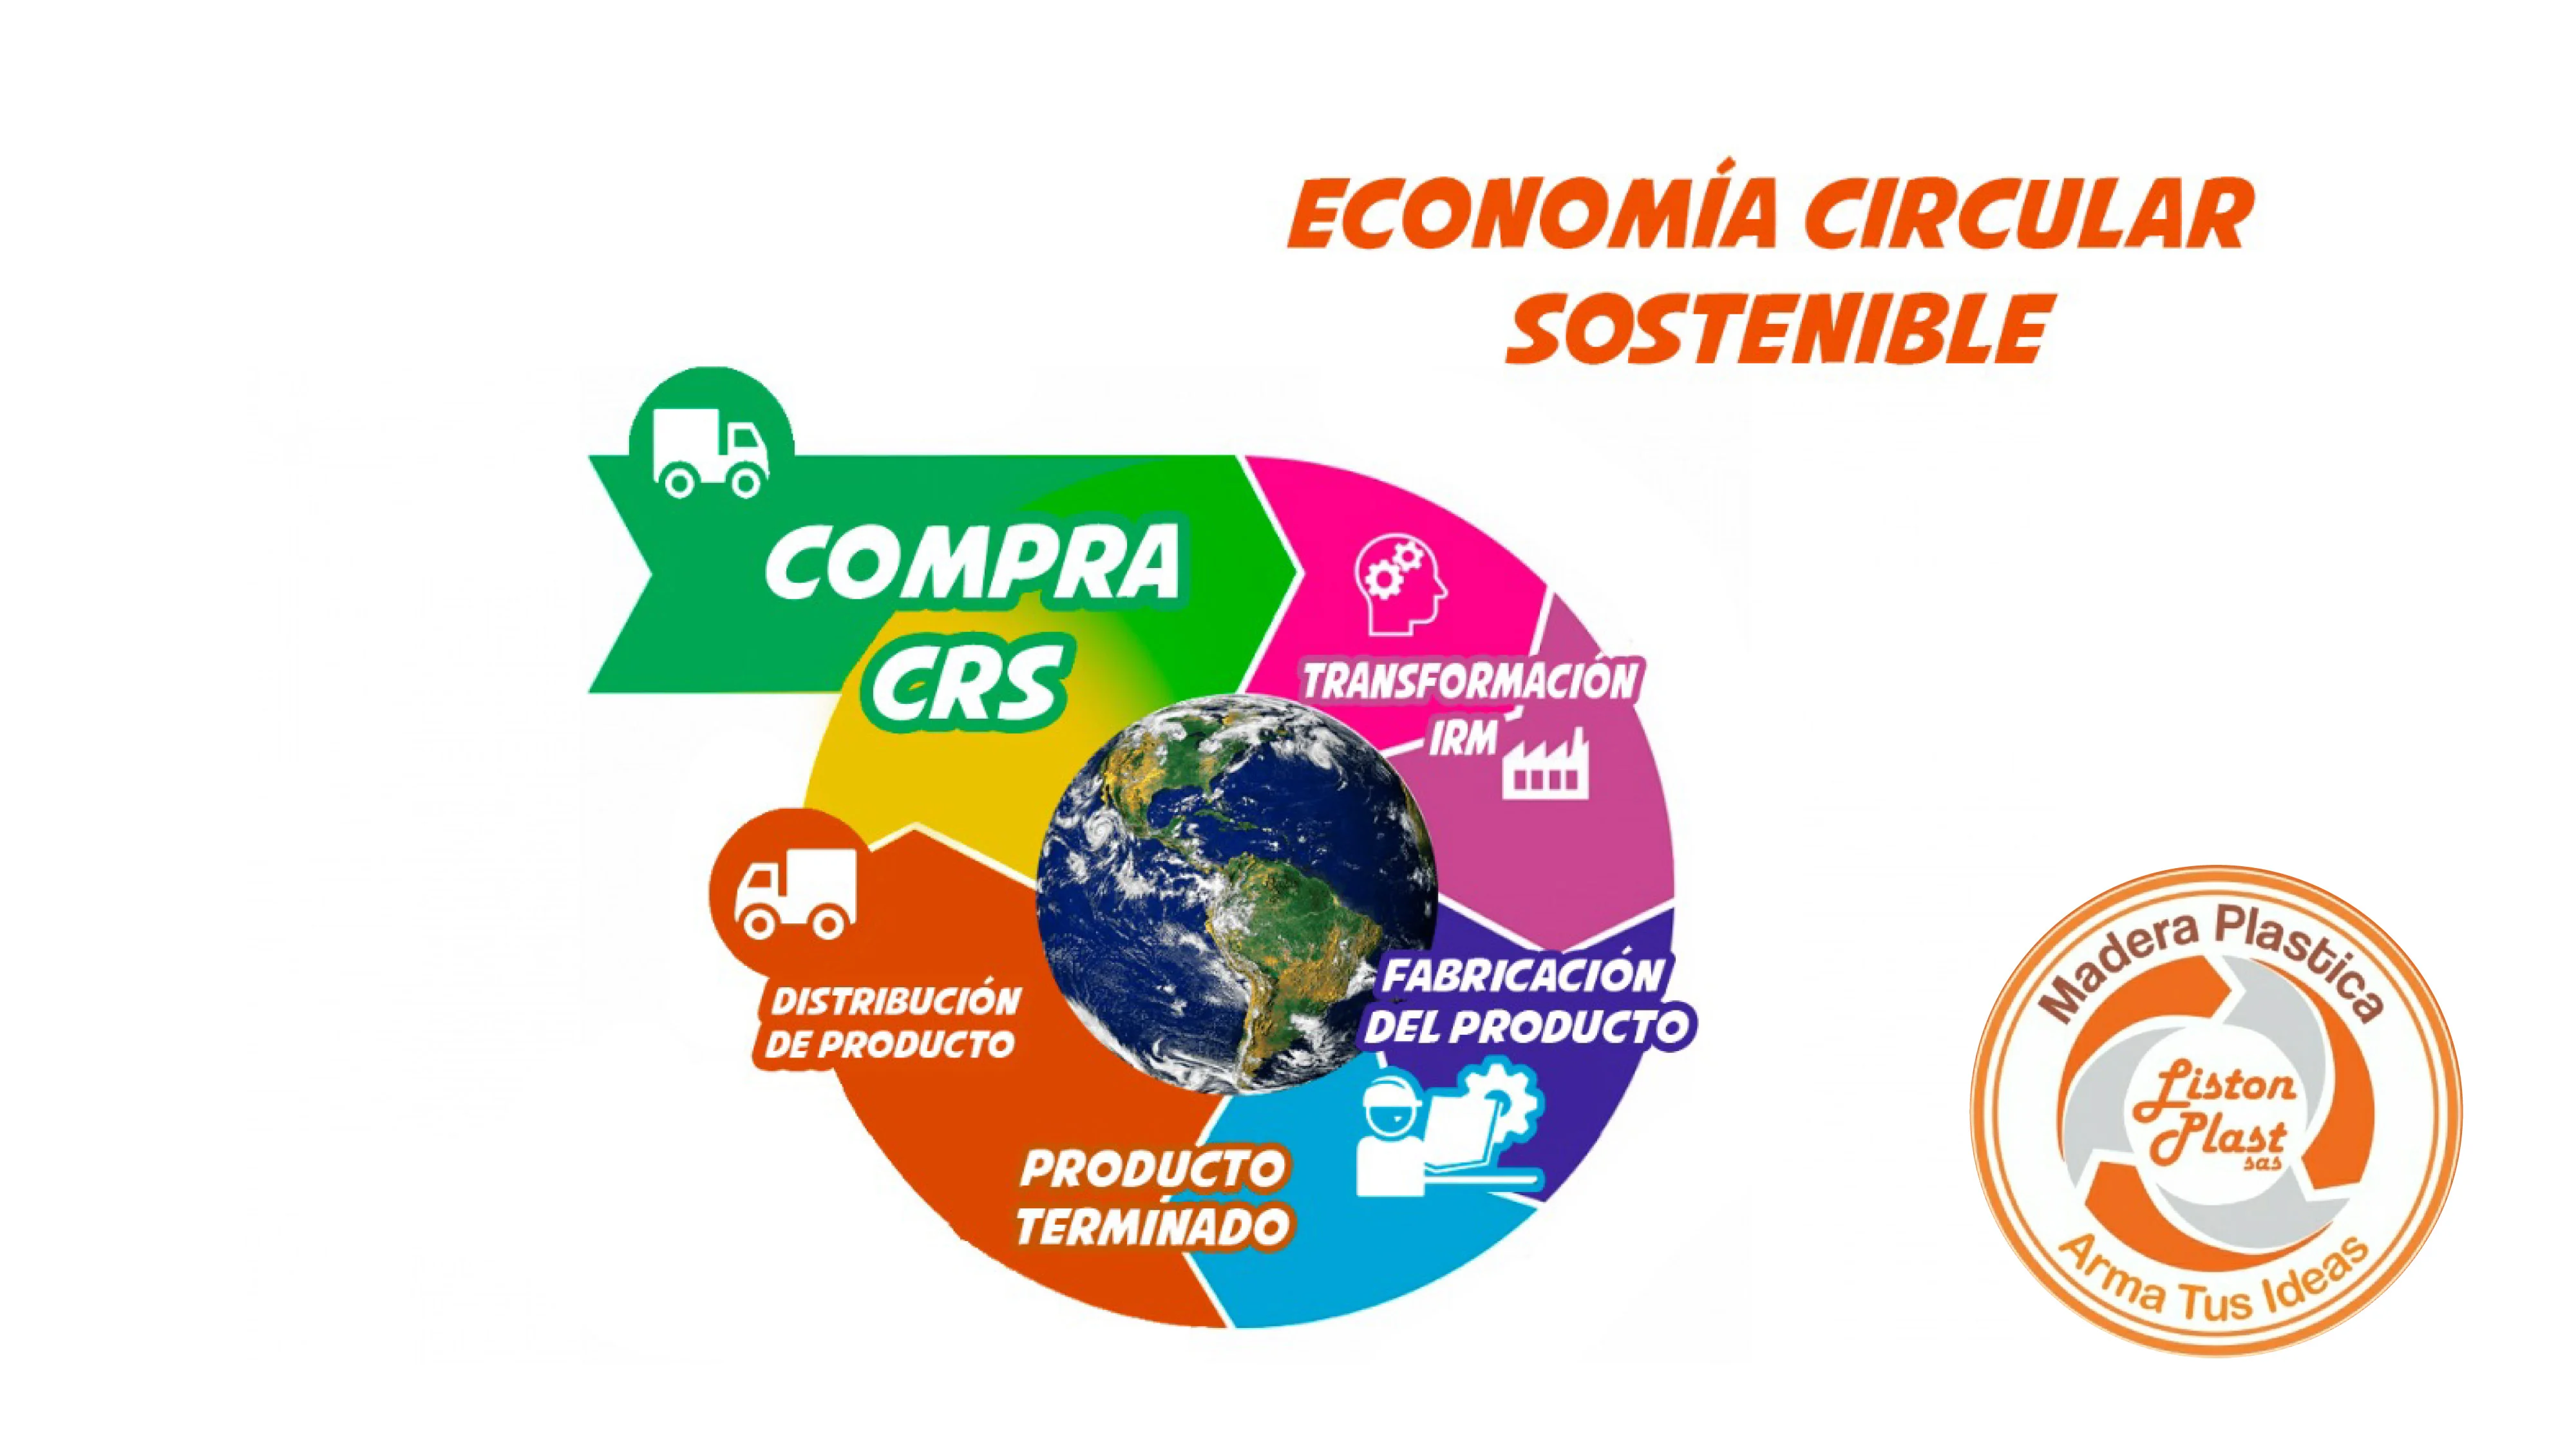 Economía circular Listonplast